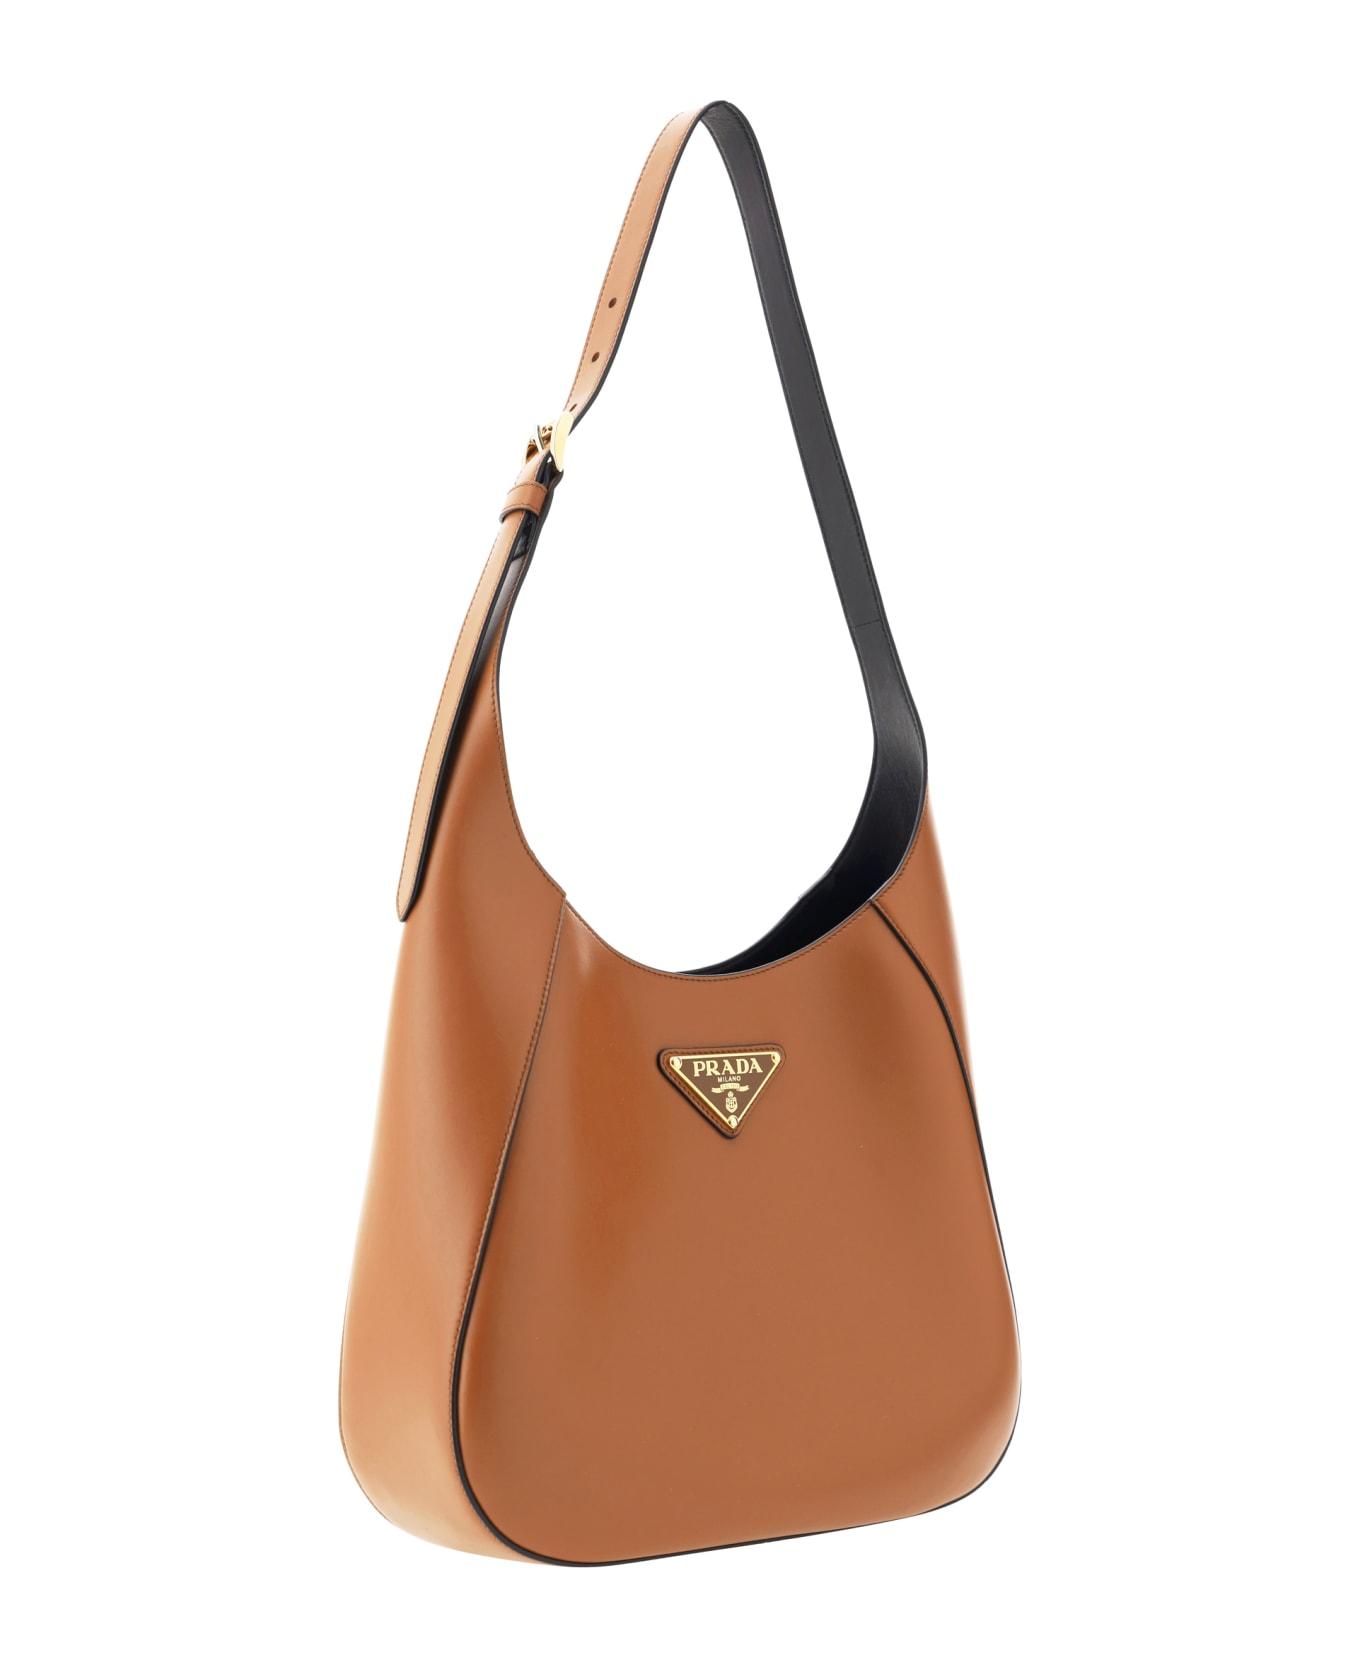 Prada Shoulder Bag - The Chanel Graffiti Backpack looks far more appropriate on